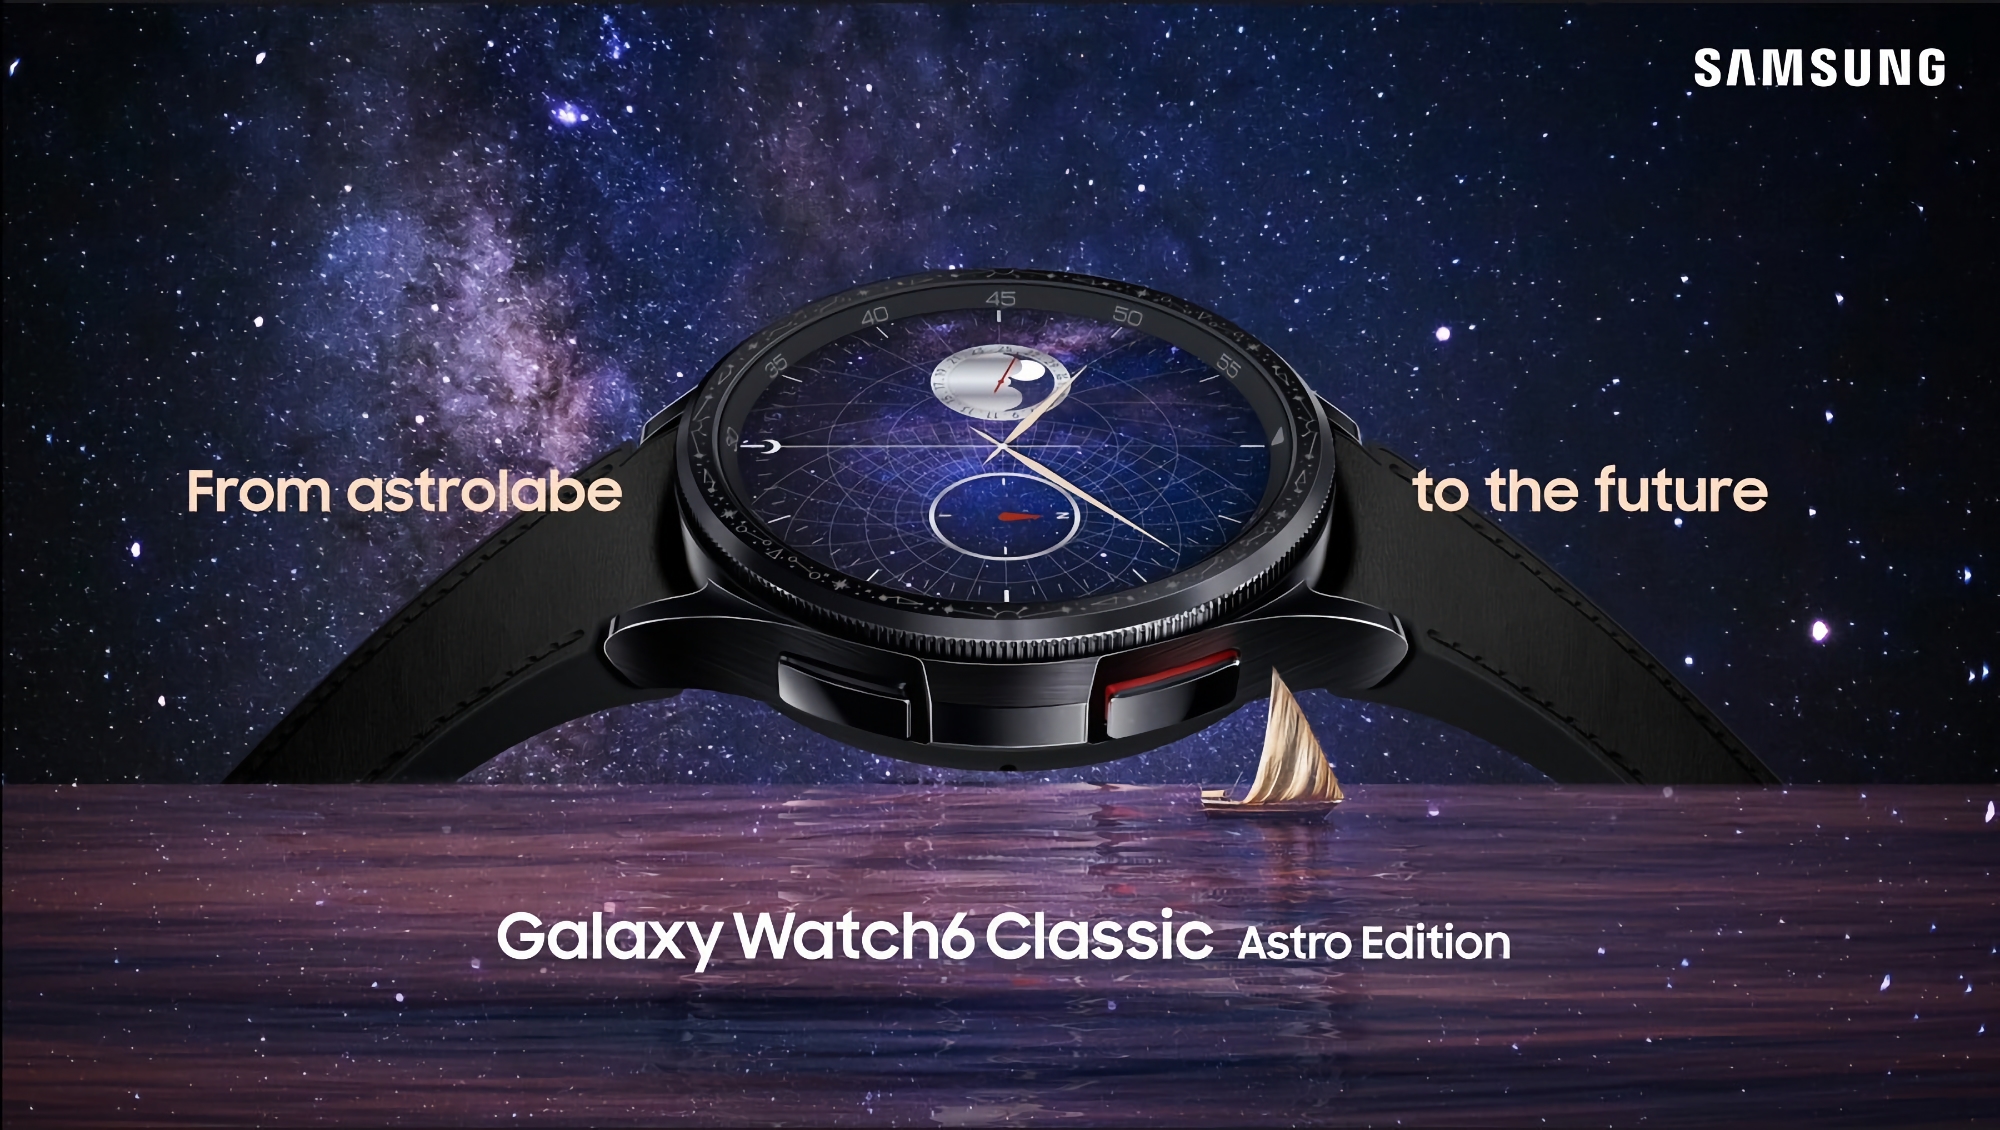 Samsung випустила спеціальну версію Galaxy Watch 6 Classic Astro Edition із безелем у вигляді астролябії